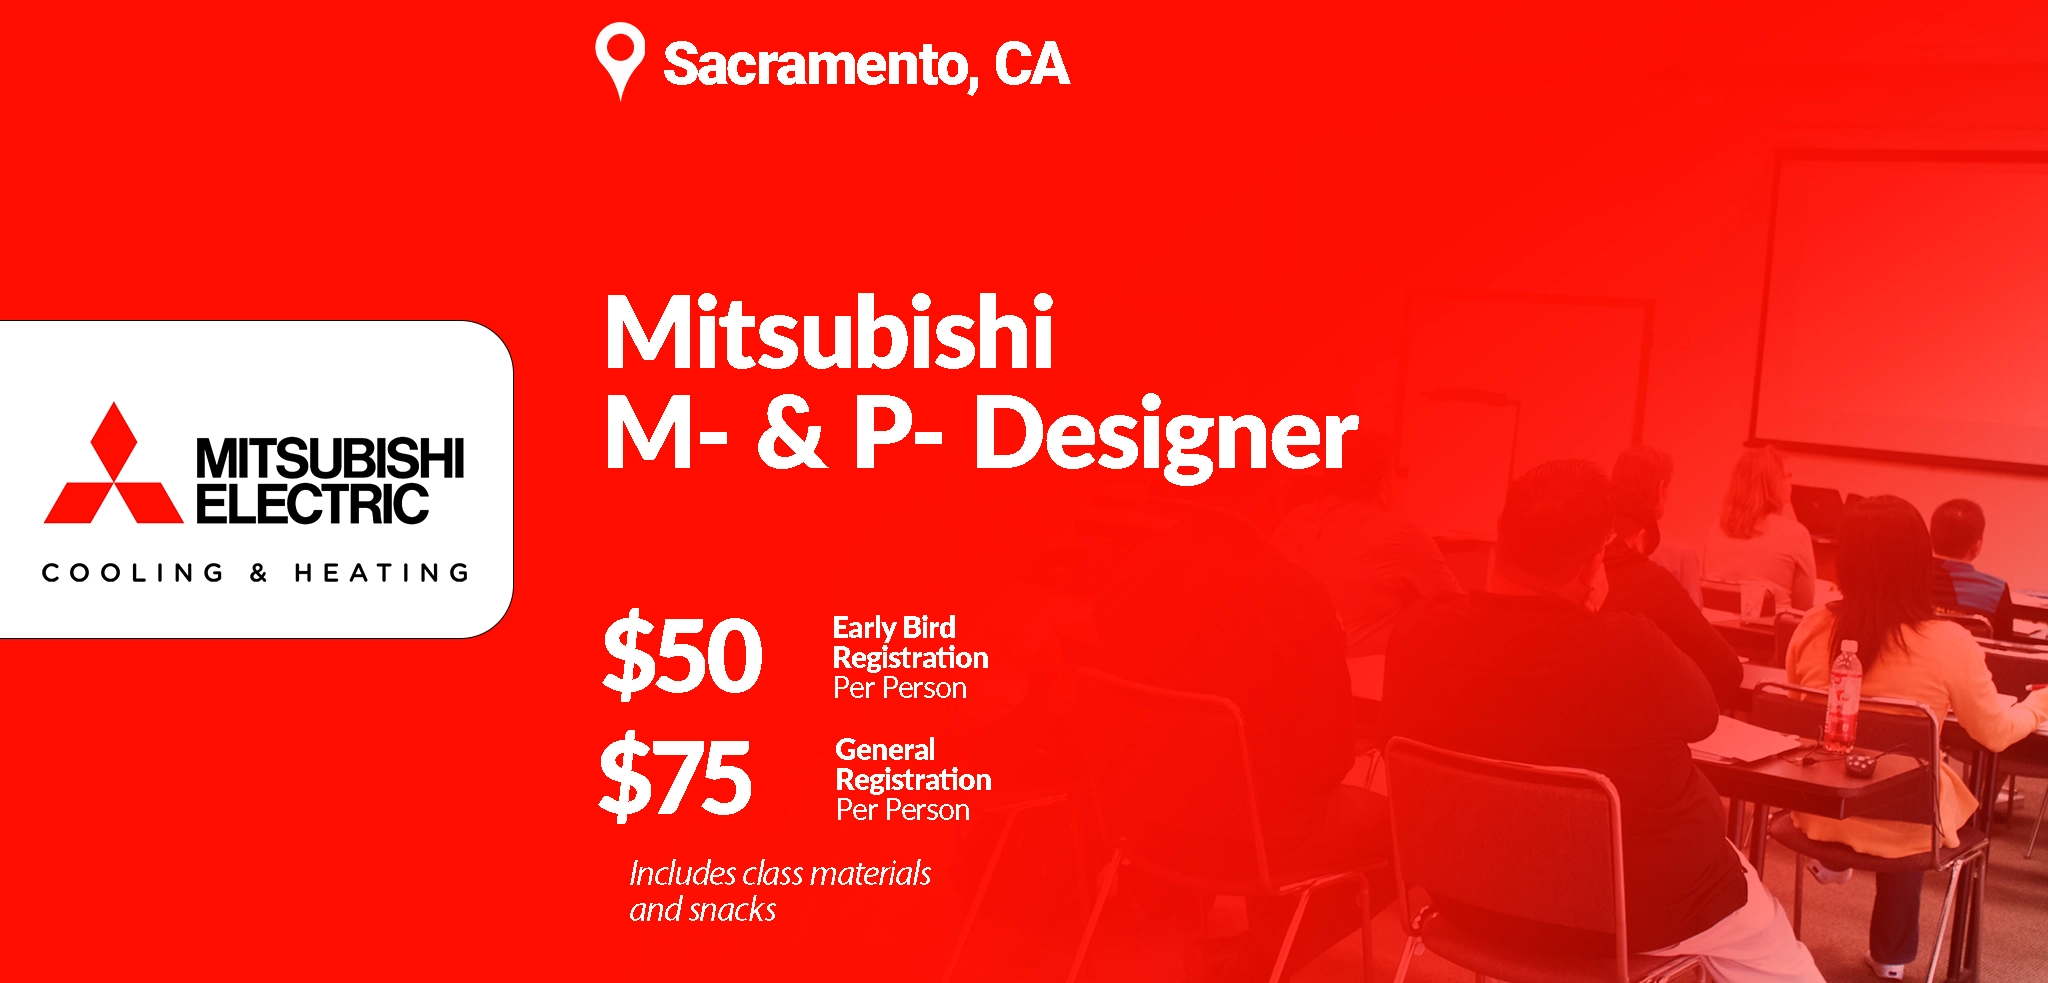 Mitsubishi M- & P- Designer